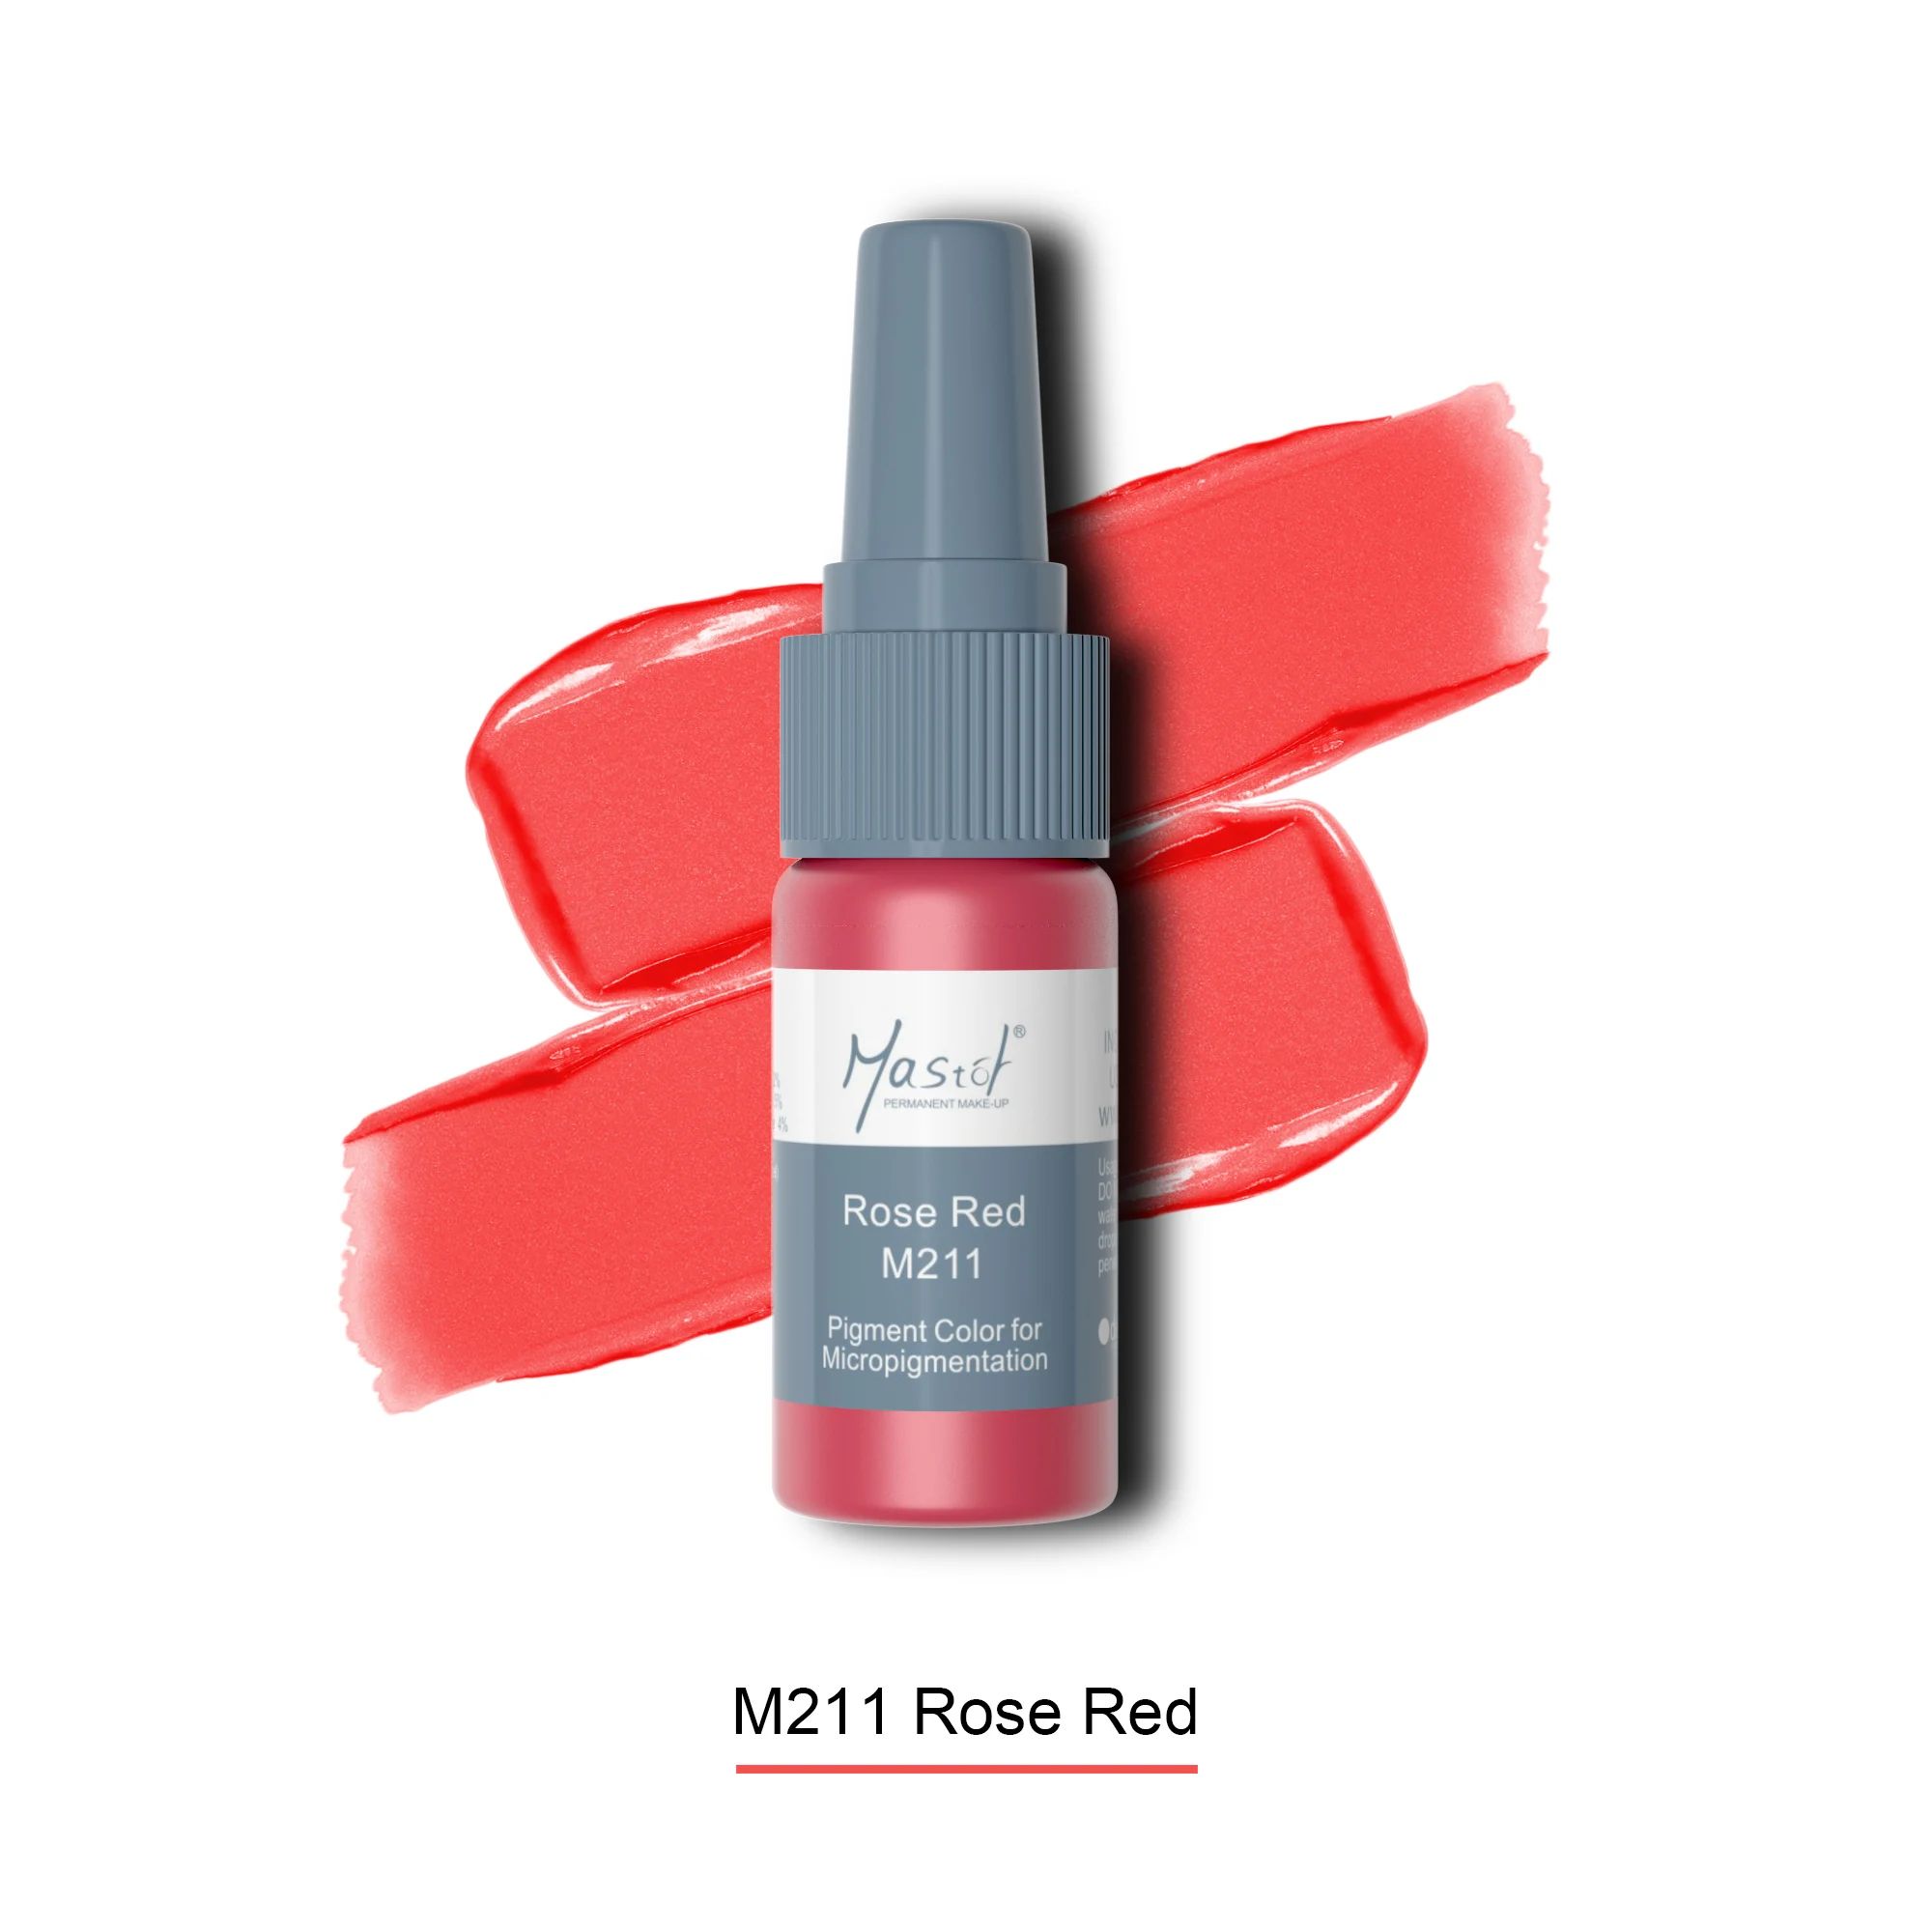 M211 Rose Red